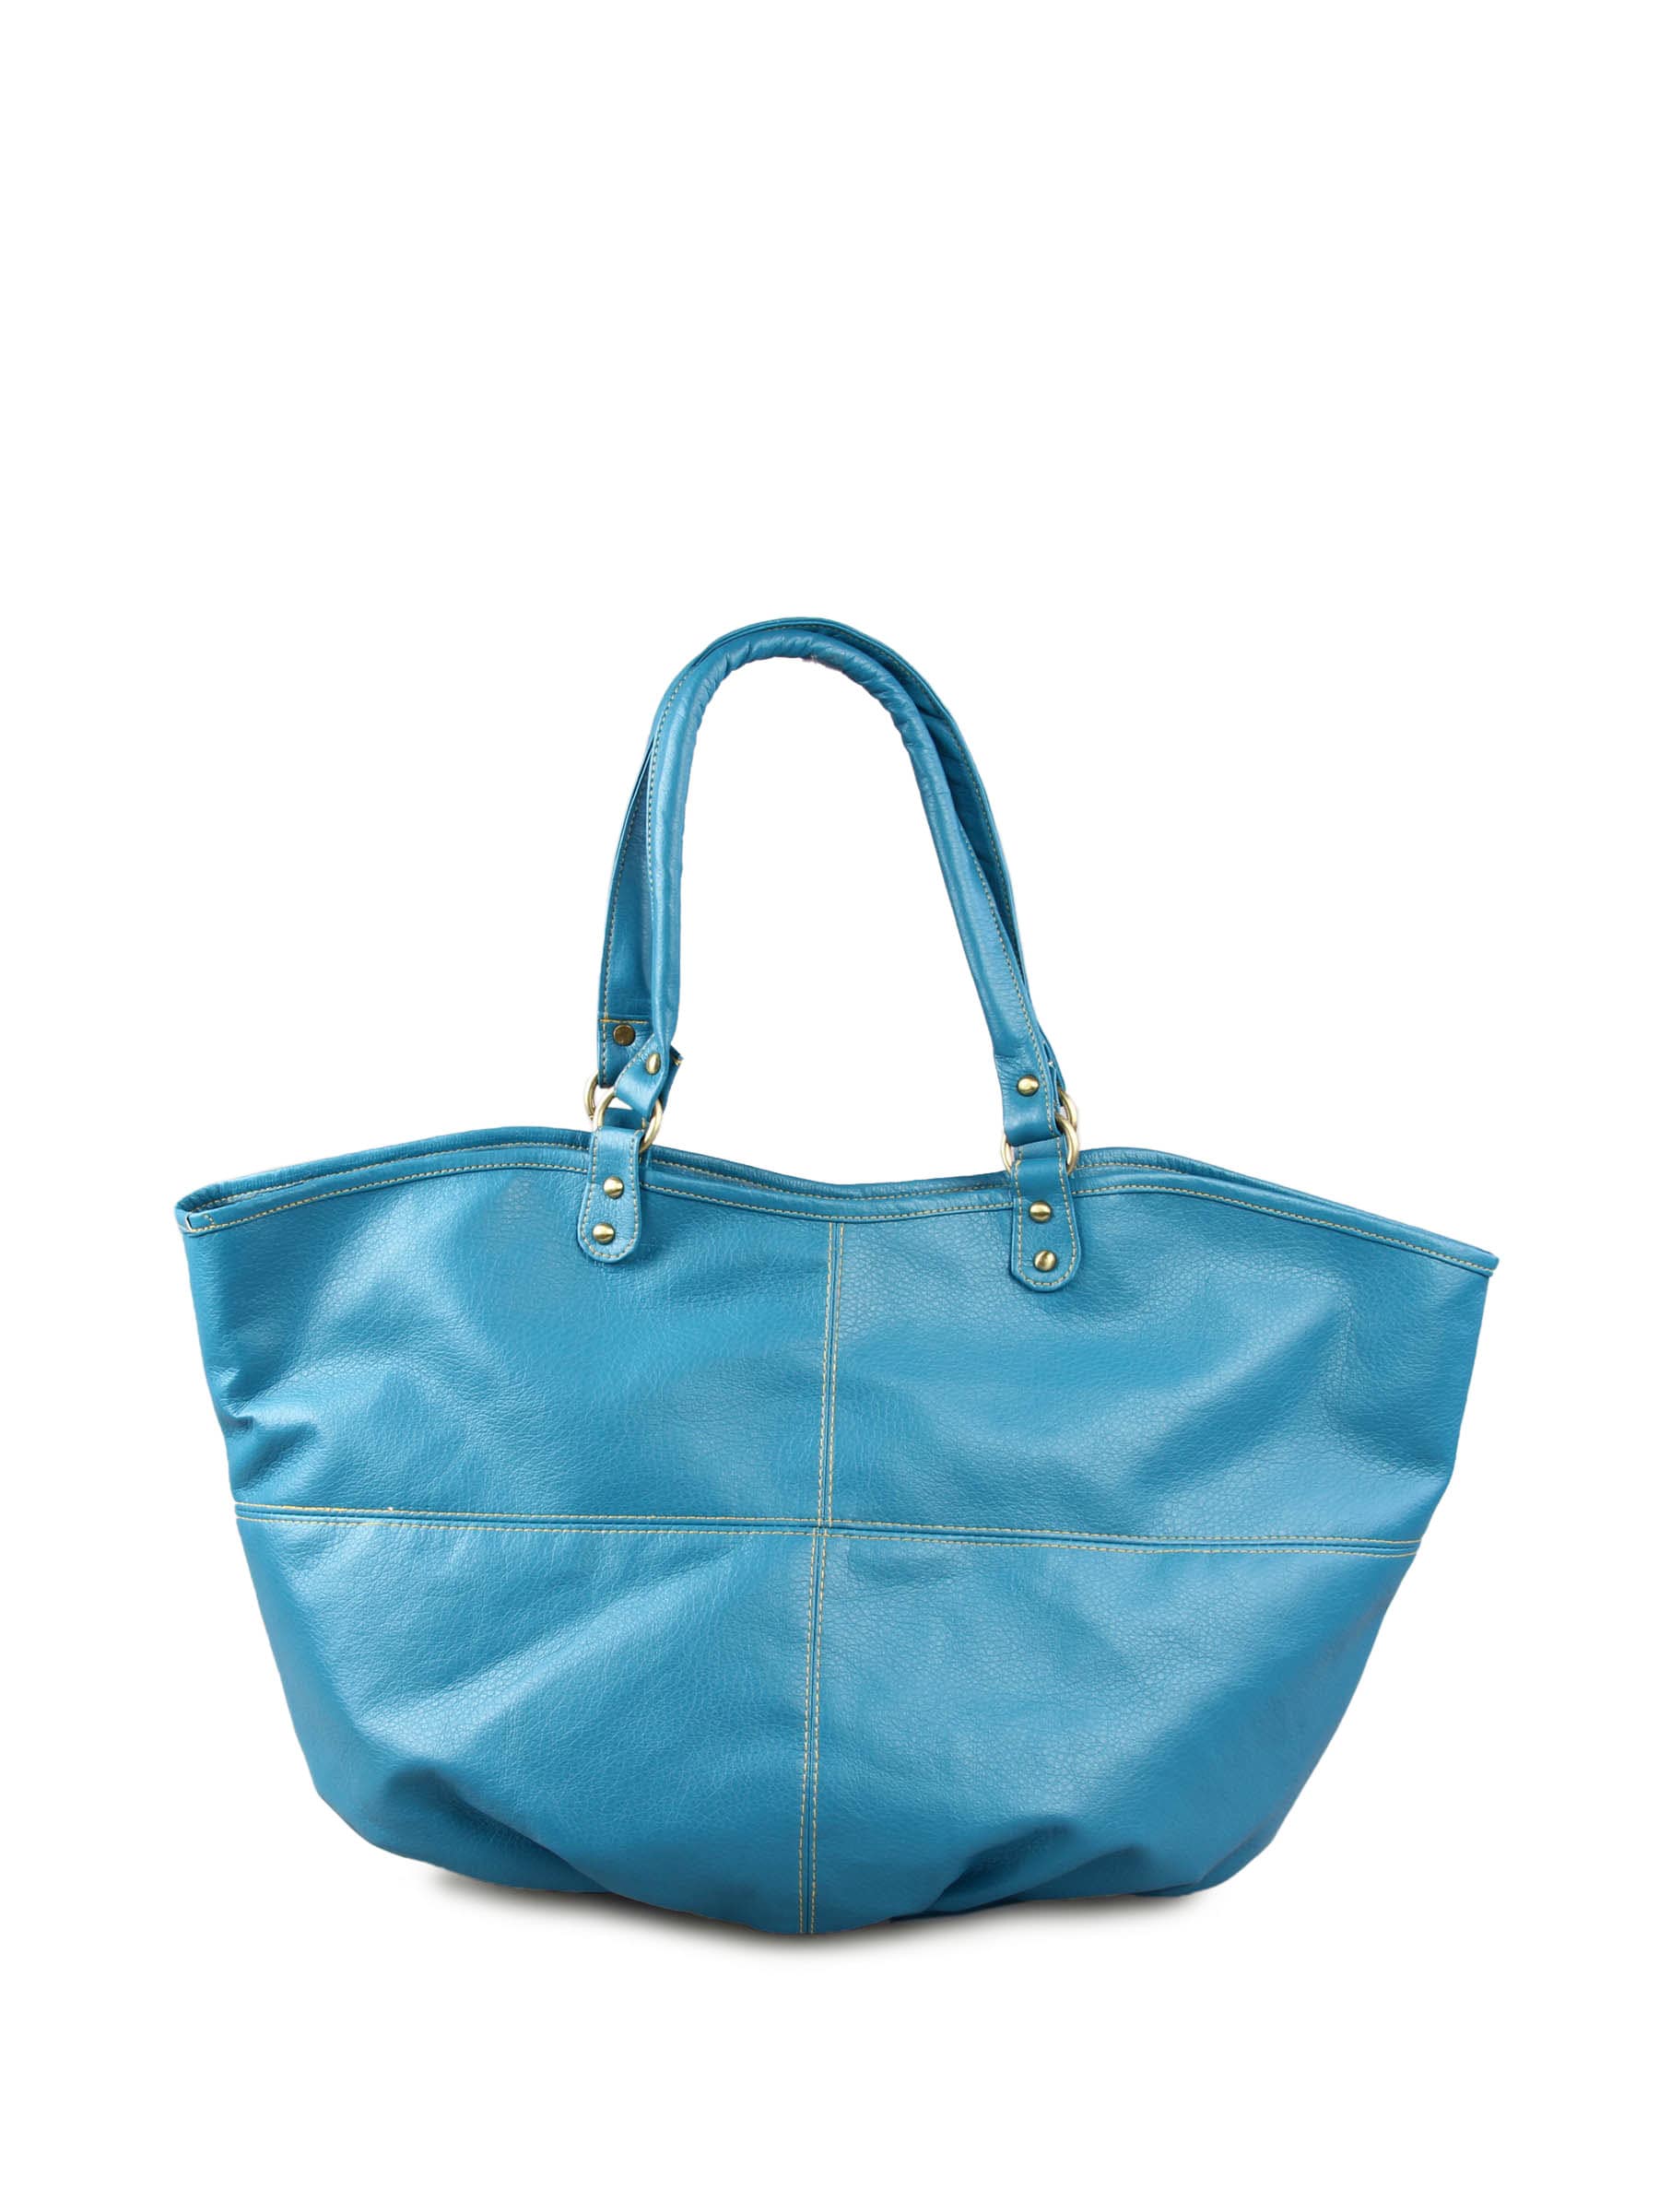 Murcia Women Teal Blue Handbag